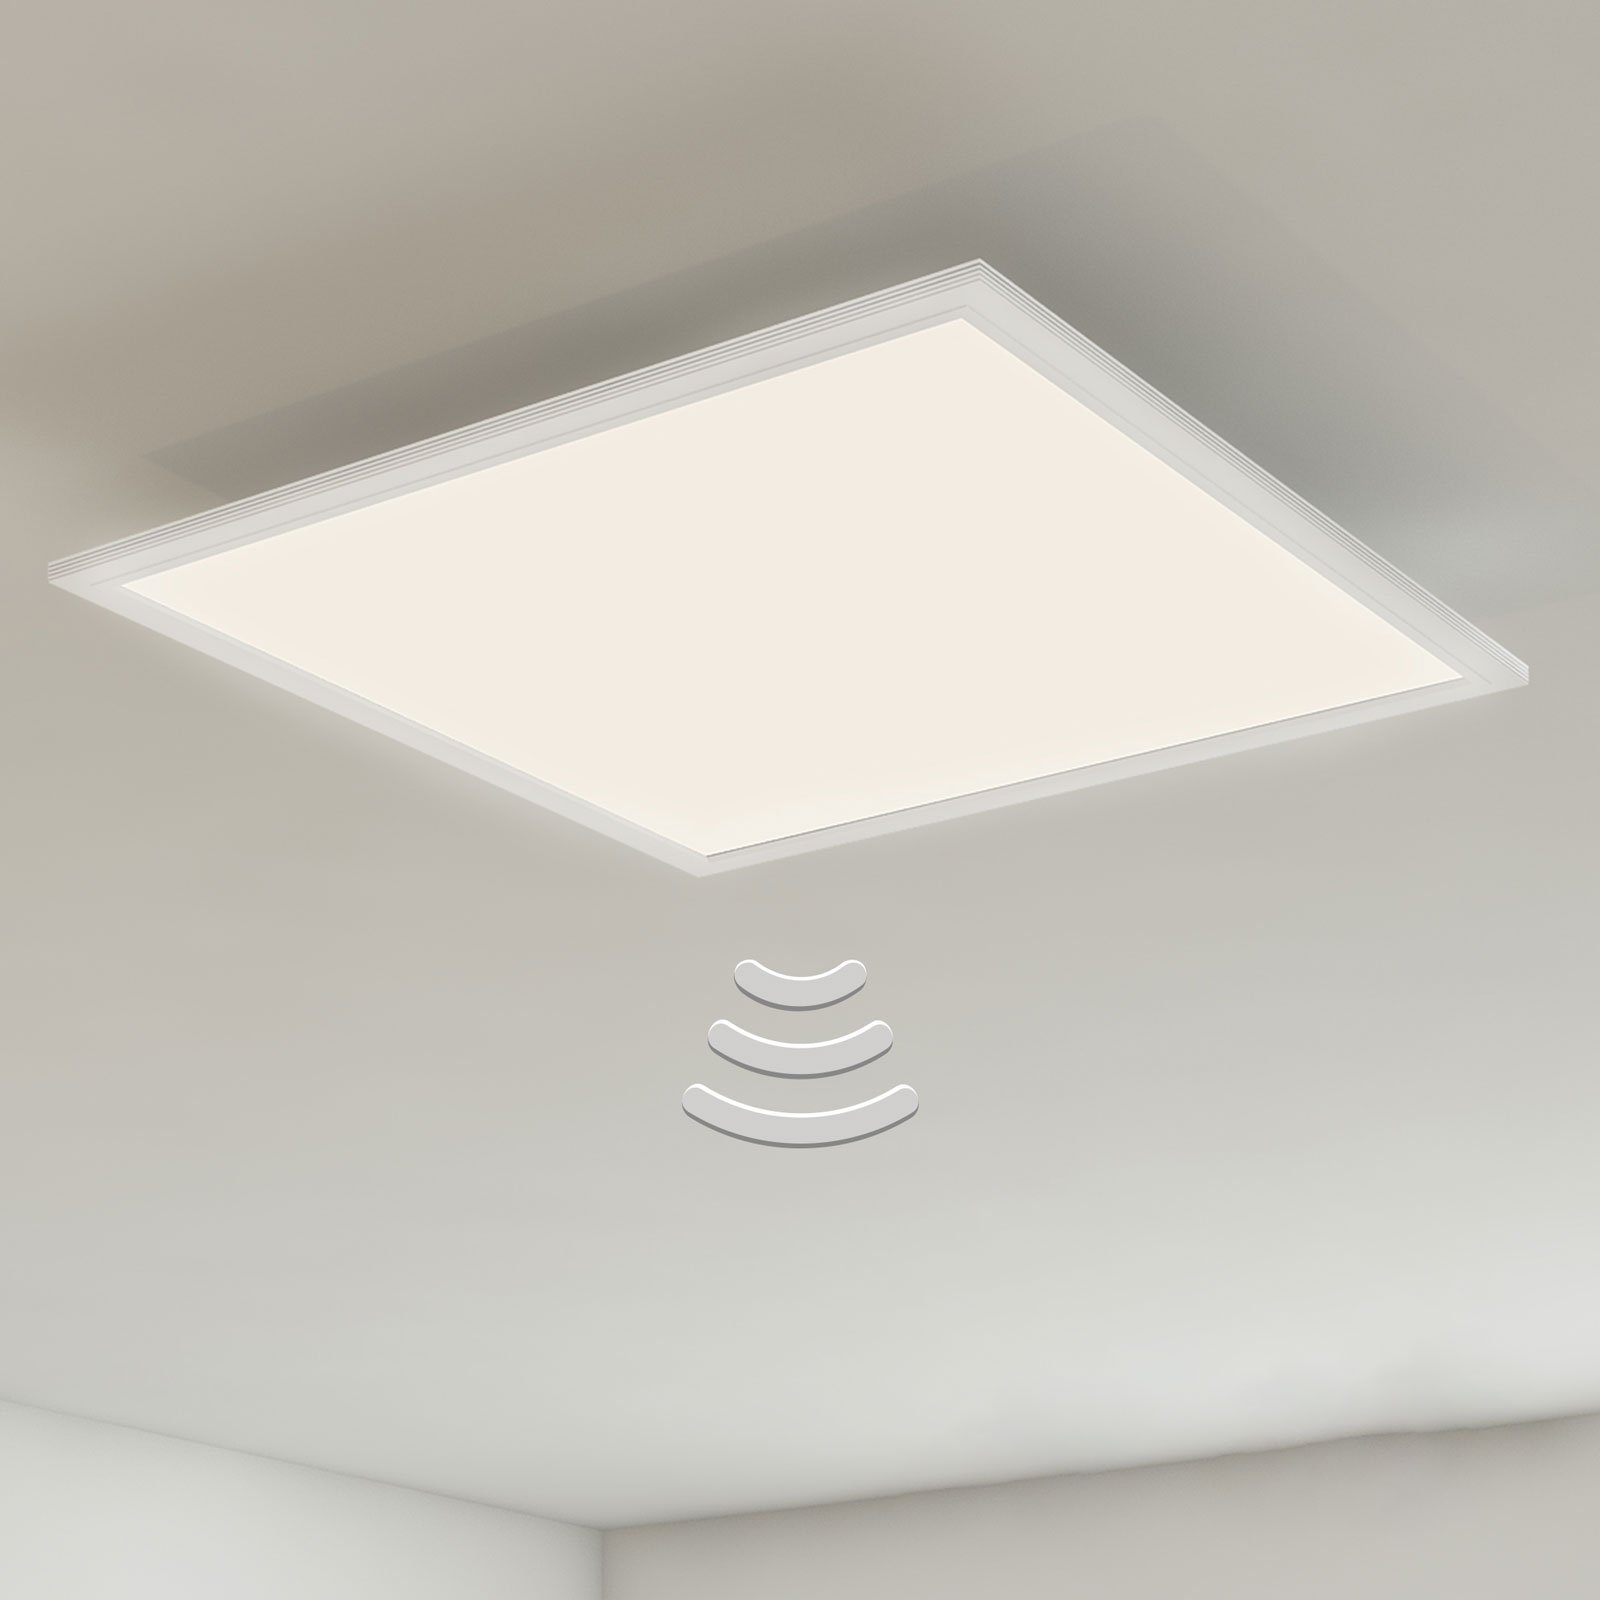 7188-016 LED ceiling lamp, sensor 59.5 x 59.5 cm